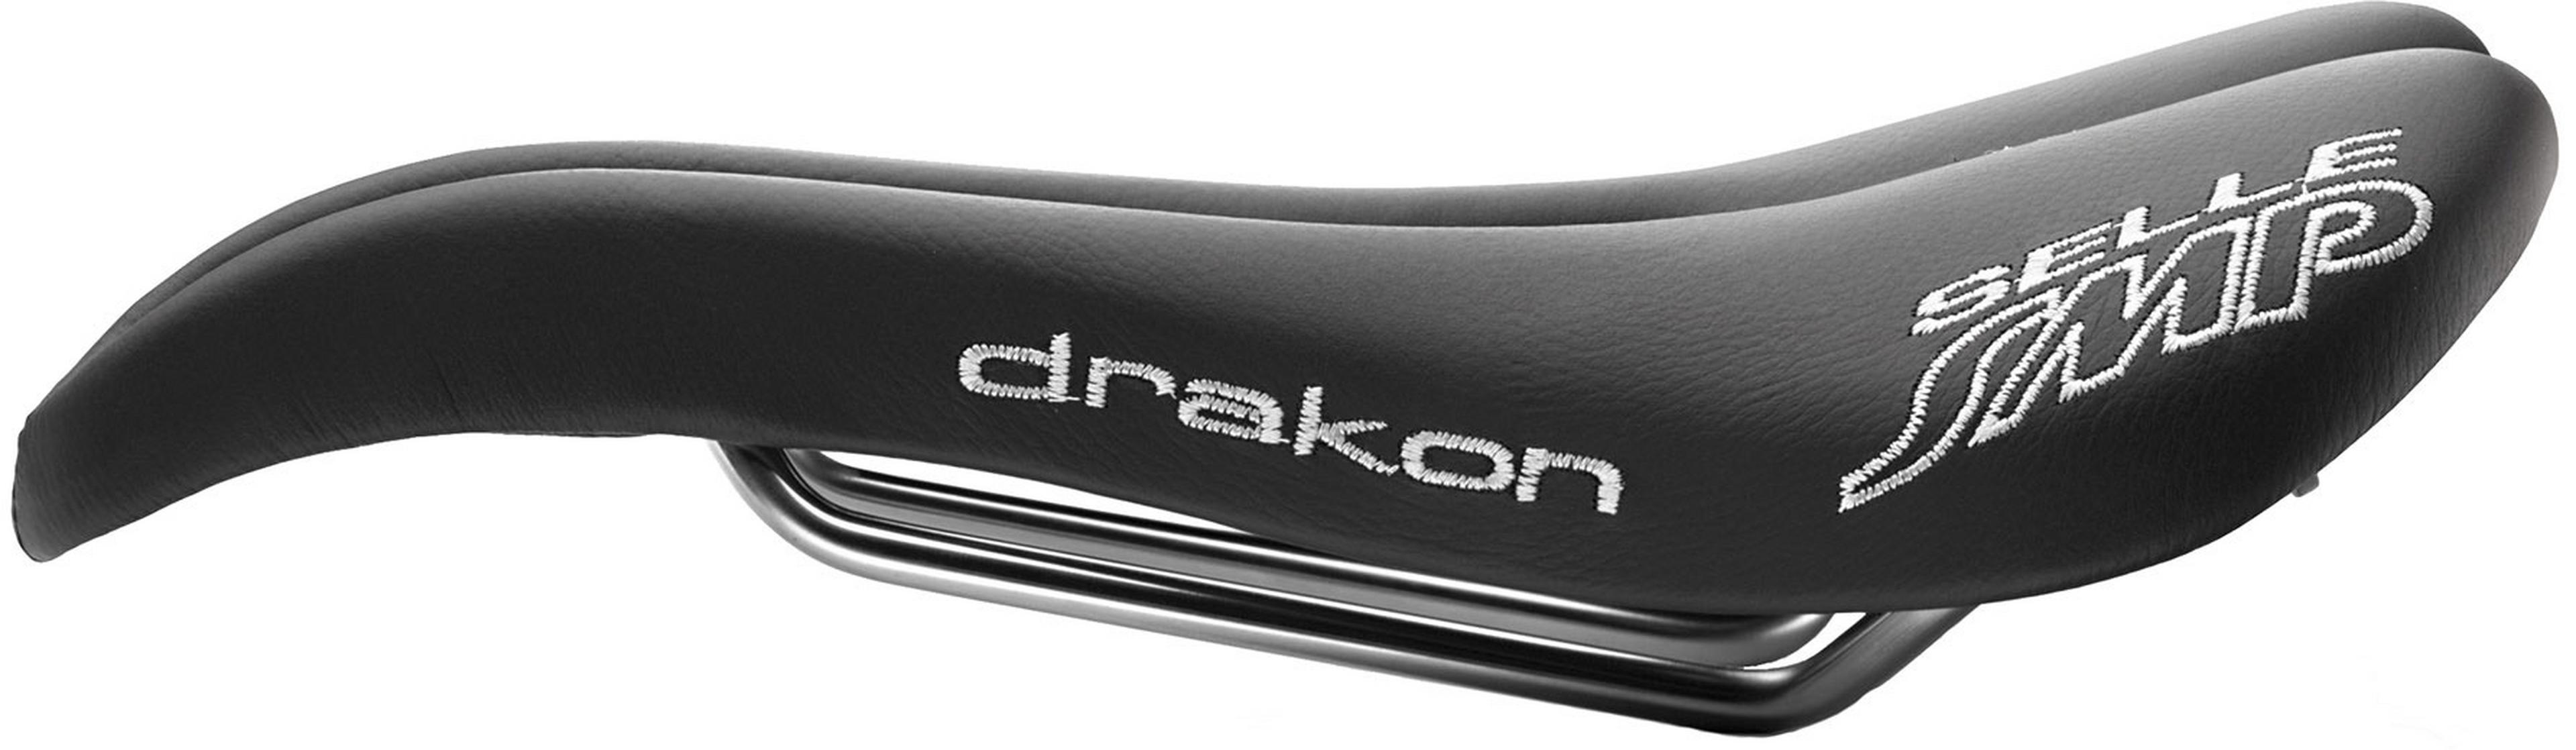 Selle SMP Drakon Bike Saddle | Chain Reaction